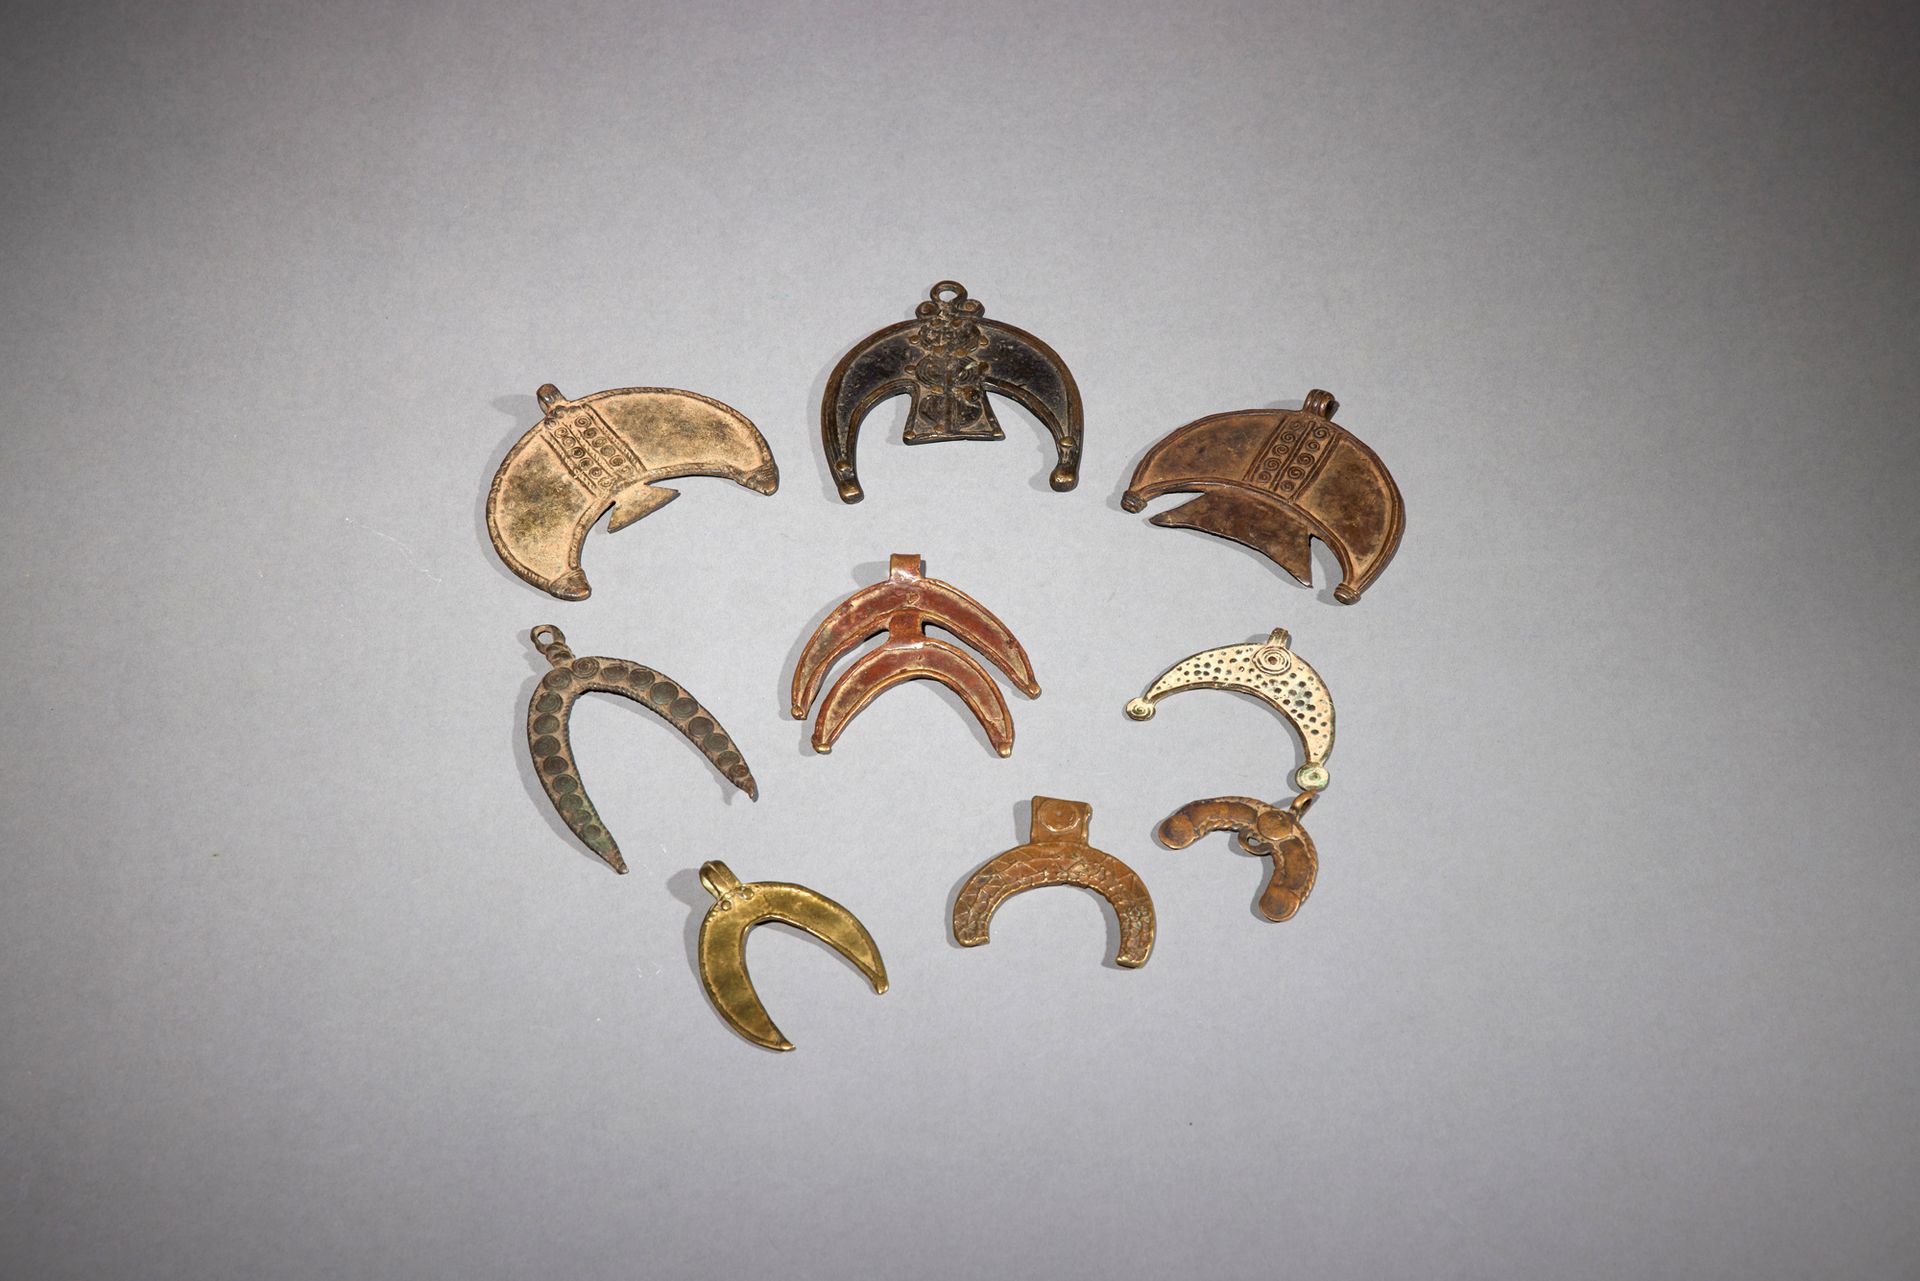 Null 九个Gurunsi吊坠

布基纳法索

铜质

长：5至10厘米



一套九个月牙形的Gurunsi青铜吊坠。